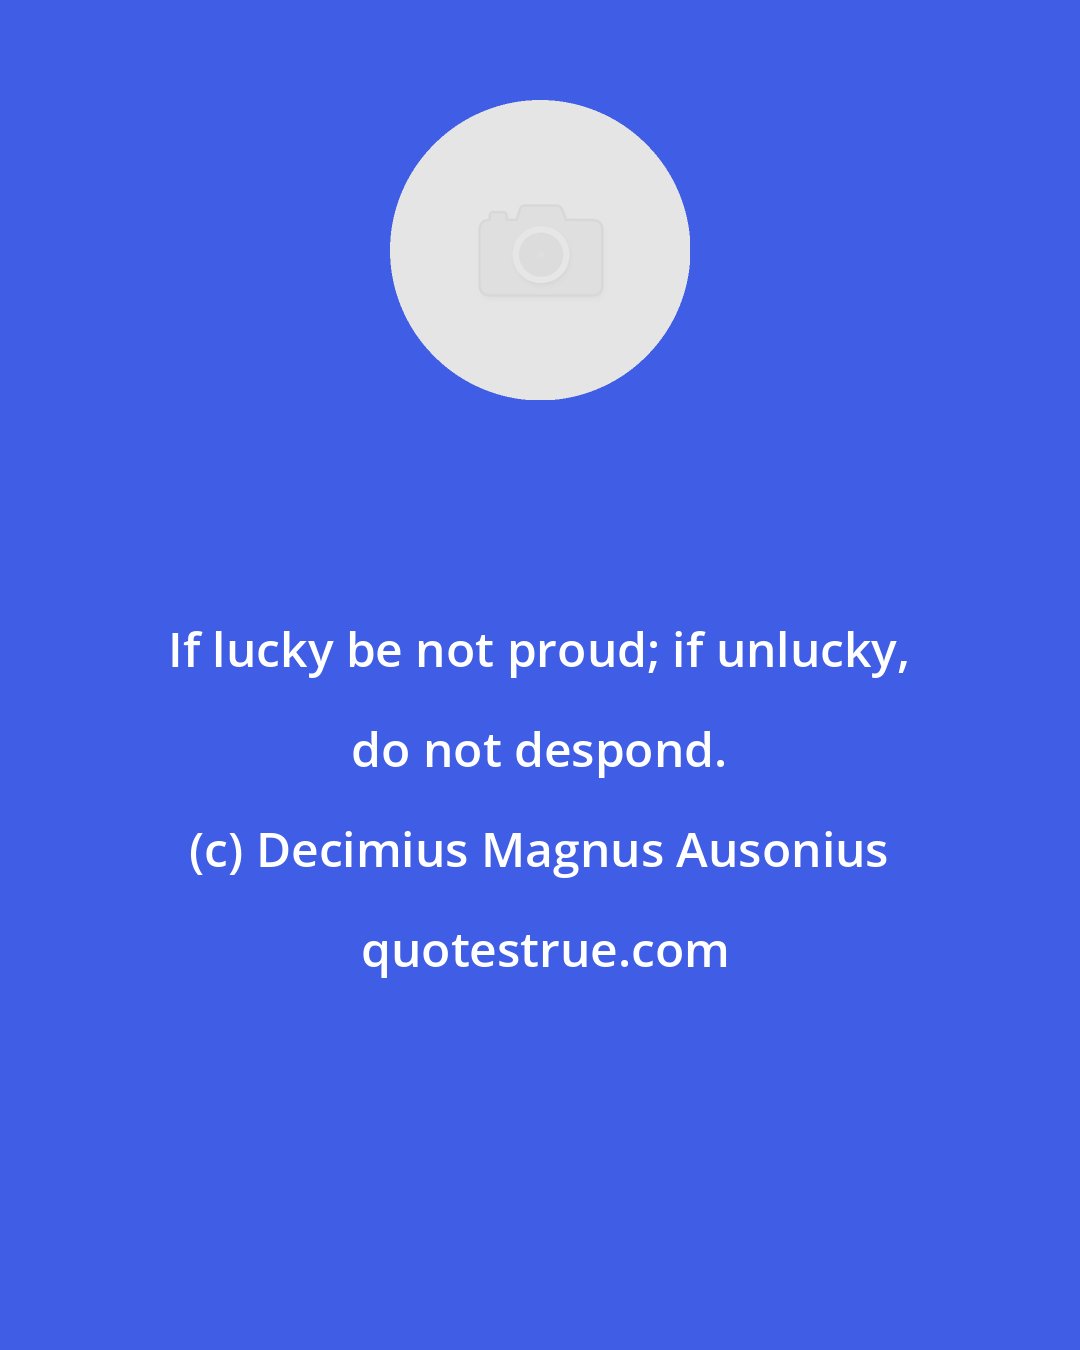 Decimius Magnus Ausonius: If lucky be not proud; if unlucky, do not despond.